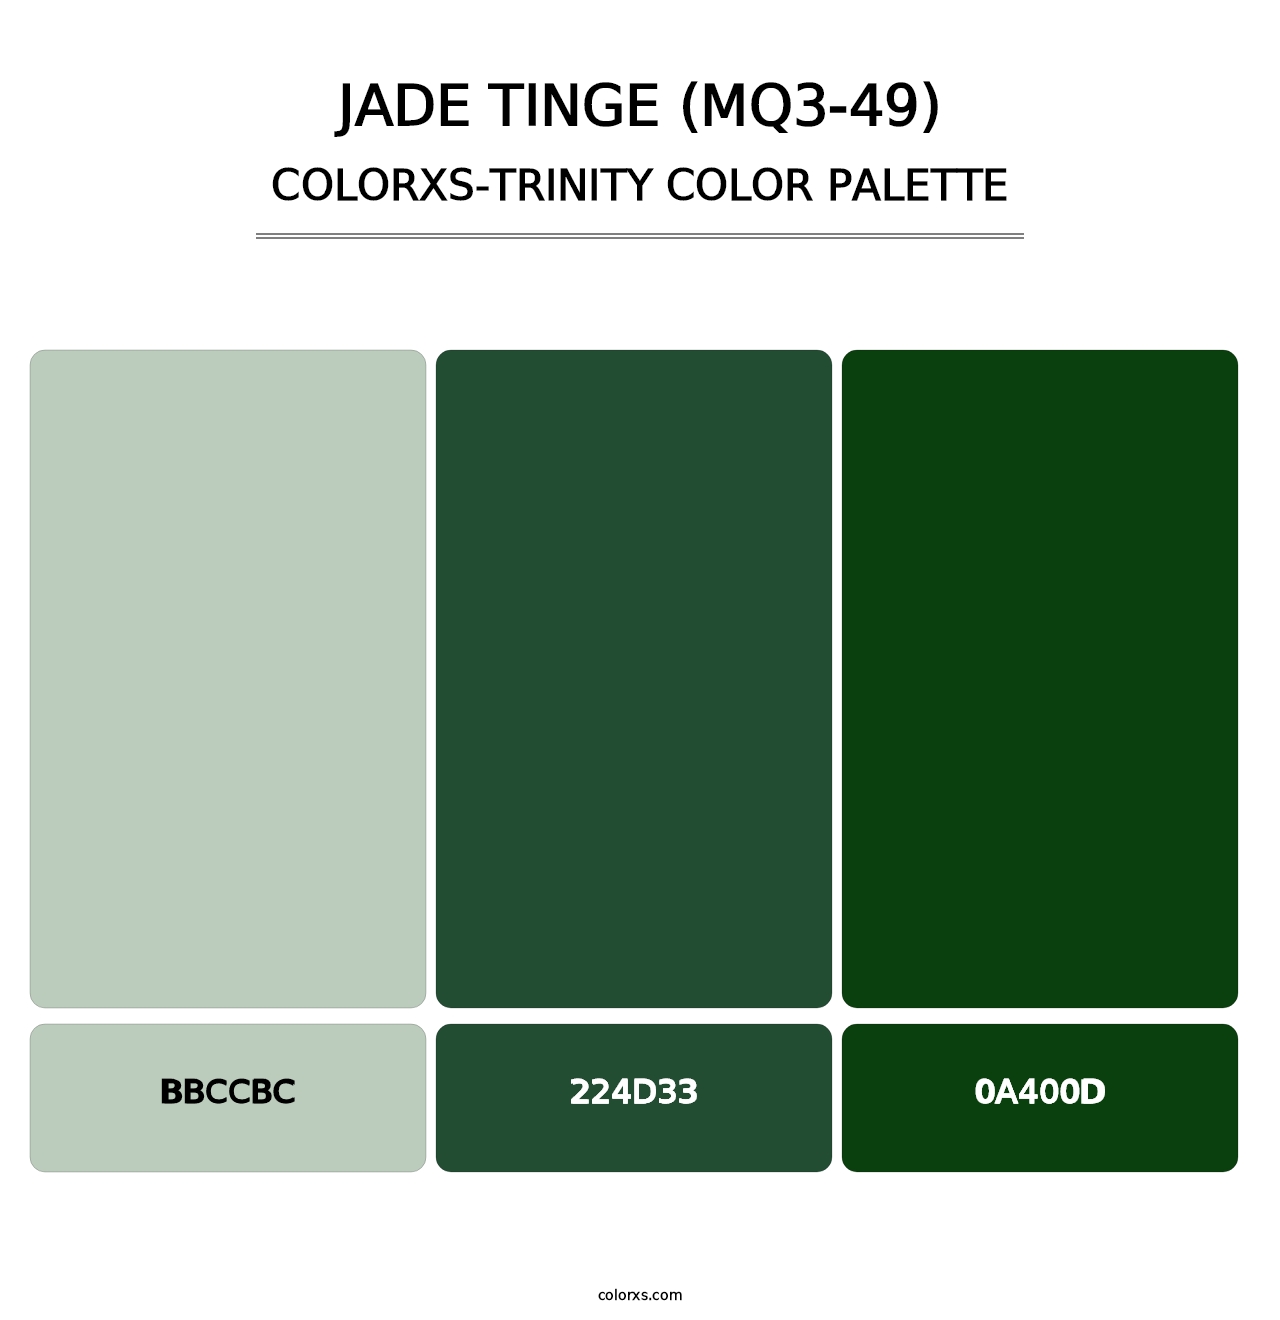 Jade Tinge (MQ3-49) - Colorxs Trinity Palette